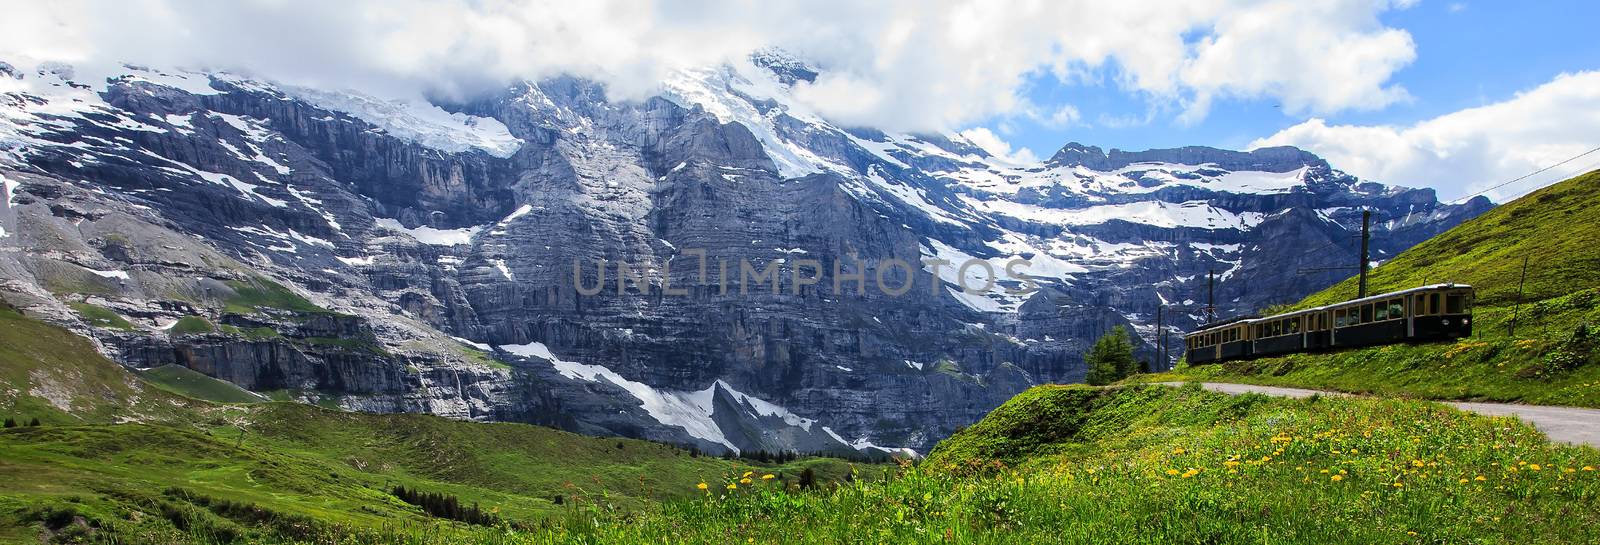 Majestic panoramic view of scenery along a swiss railways train, connecting Kleine Scheidegg to Wengernalp stations, Switzerland.